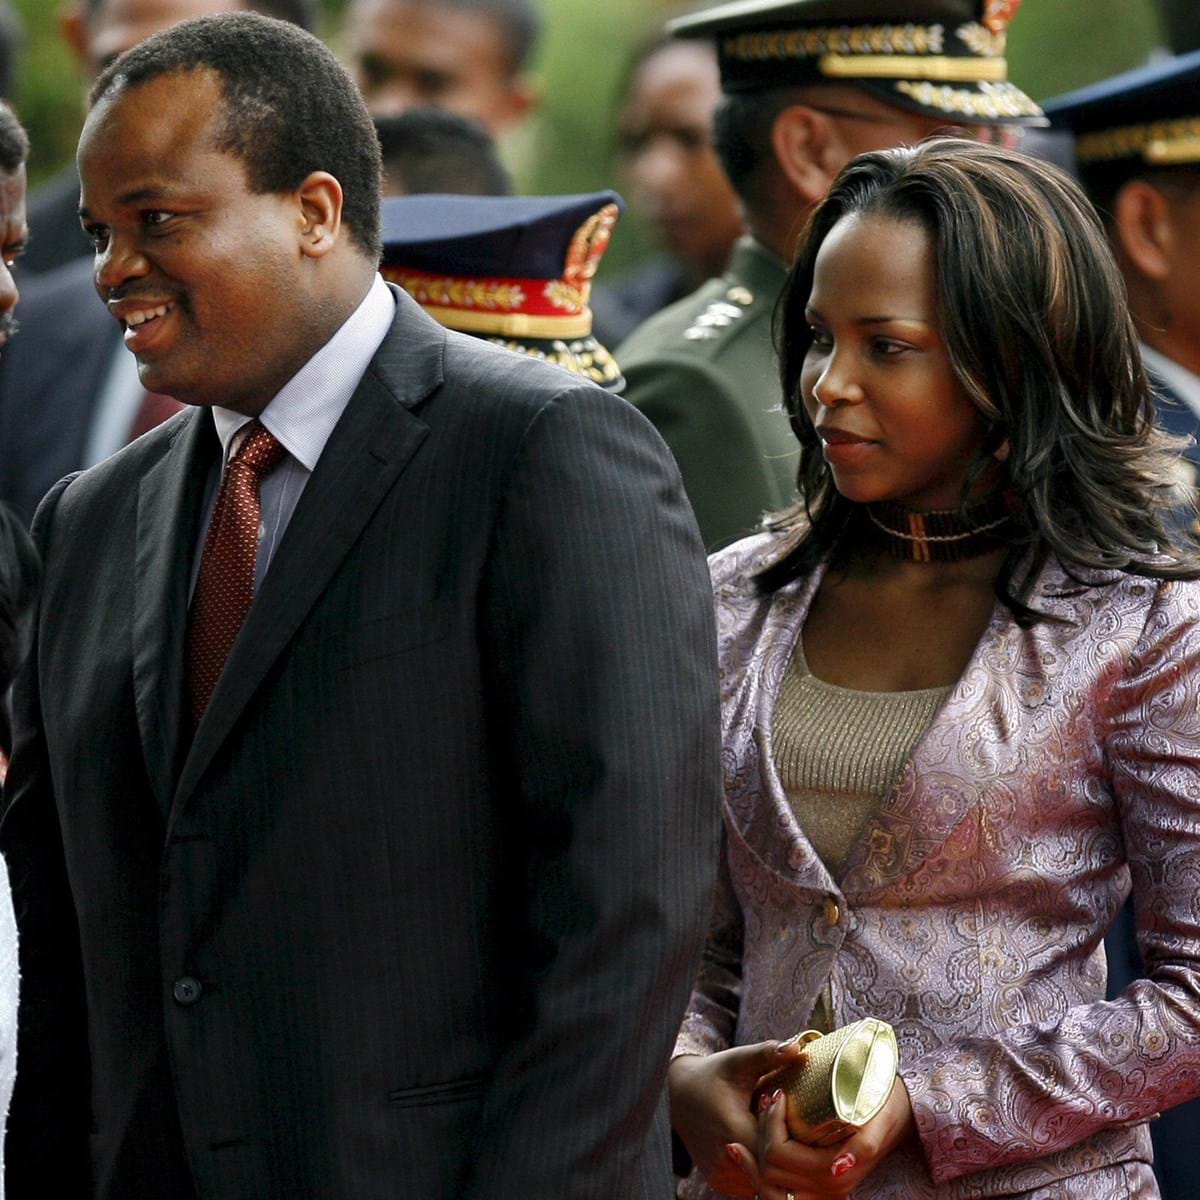 Rei Mswati traído pela 12.ª esposa - Mundo foto